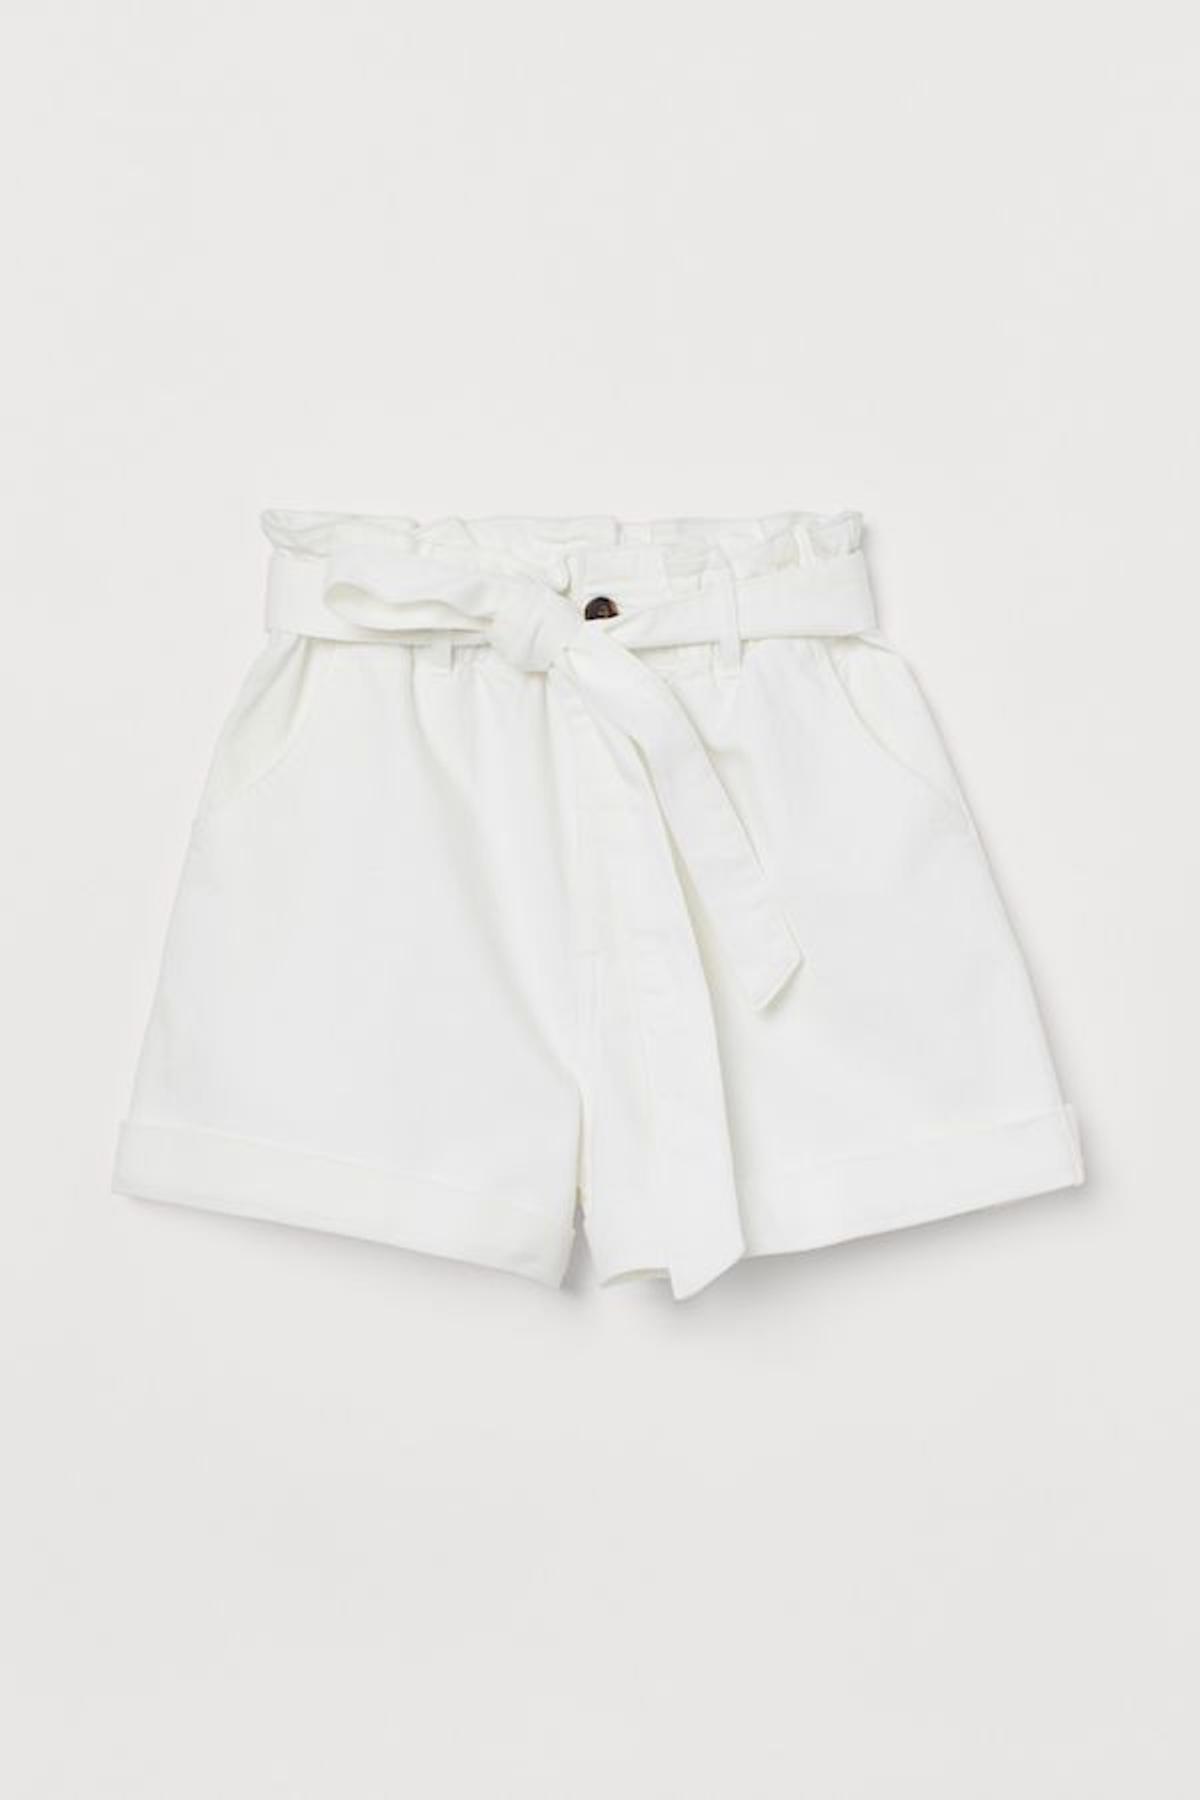 Los shorts total white